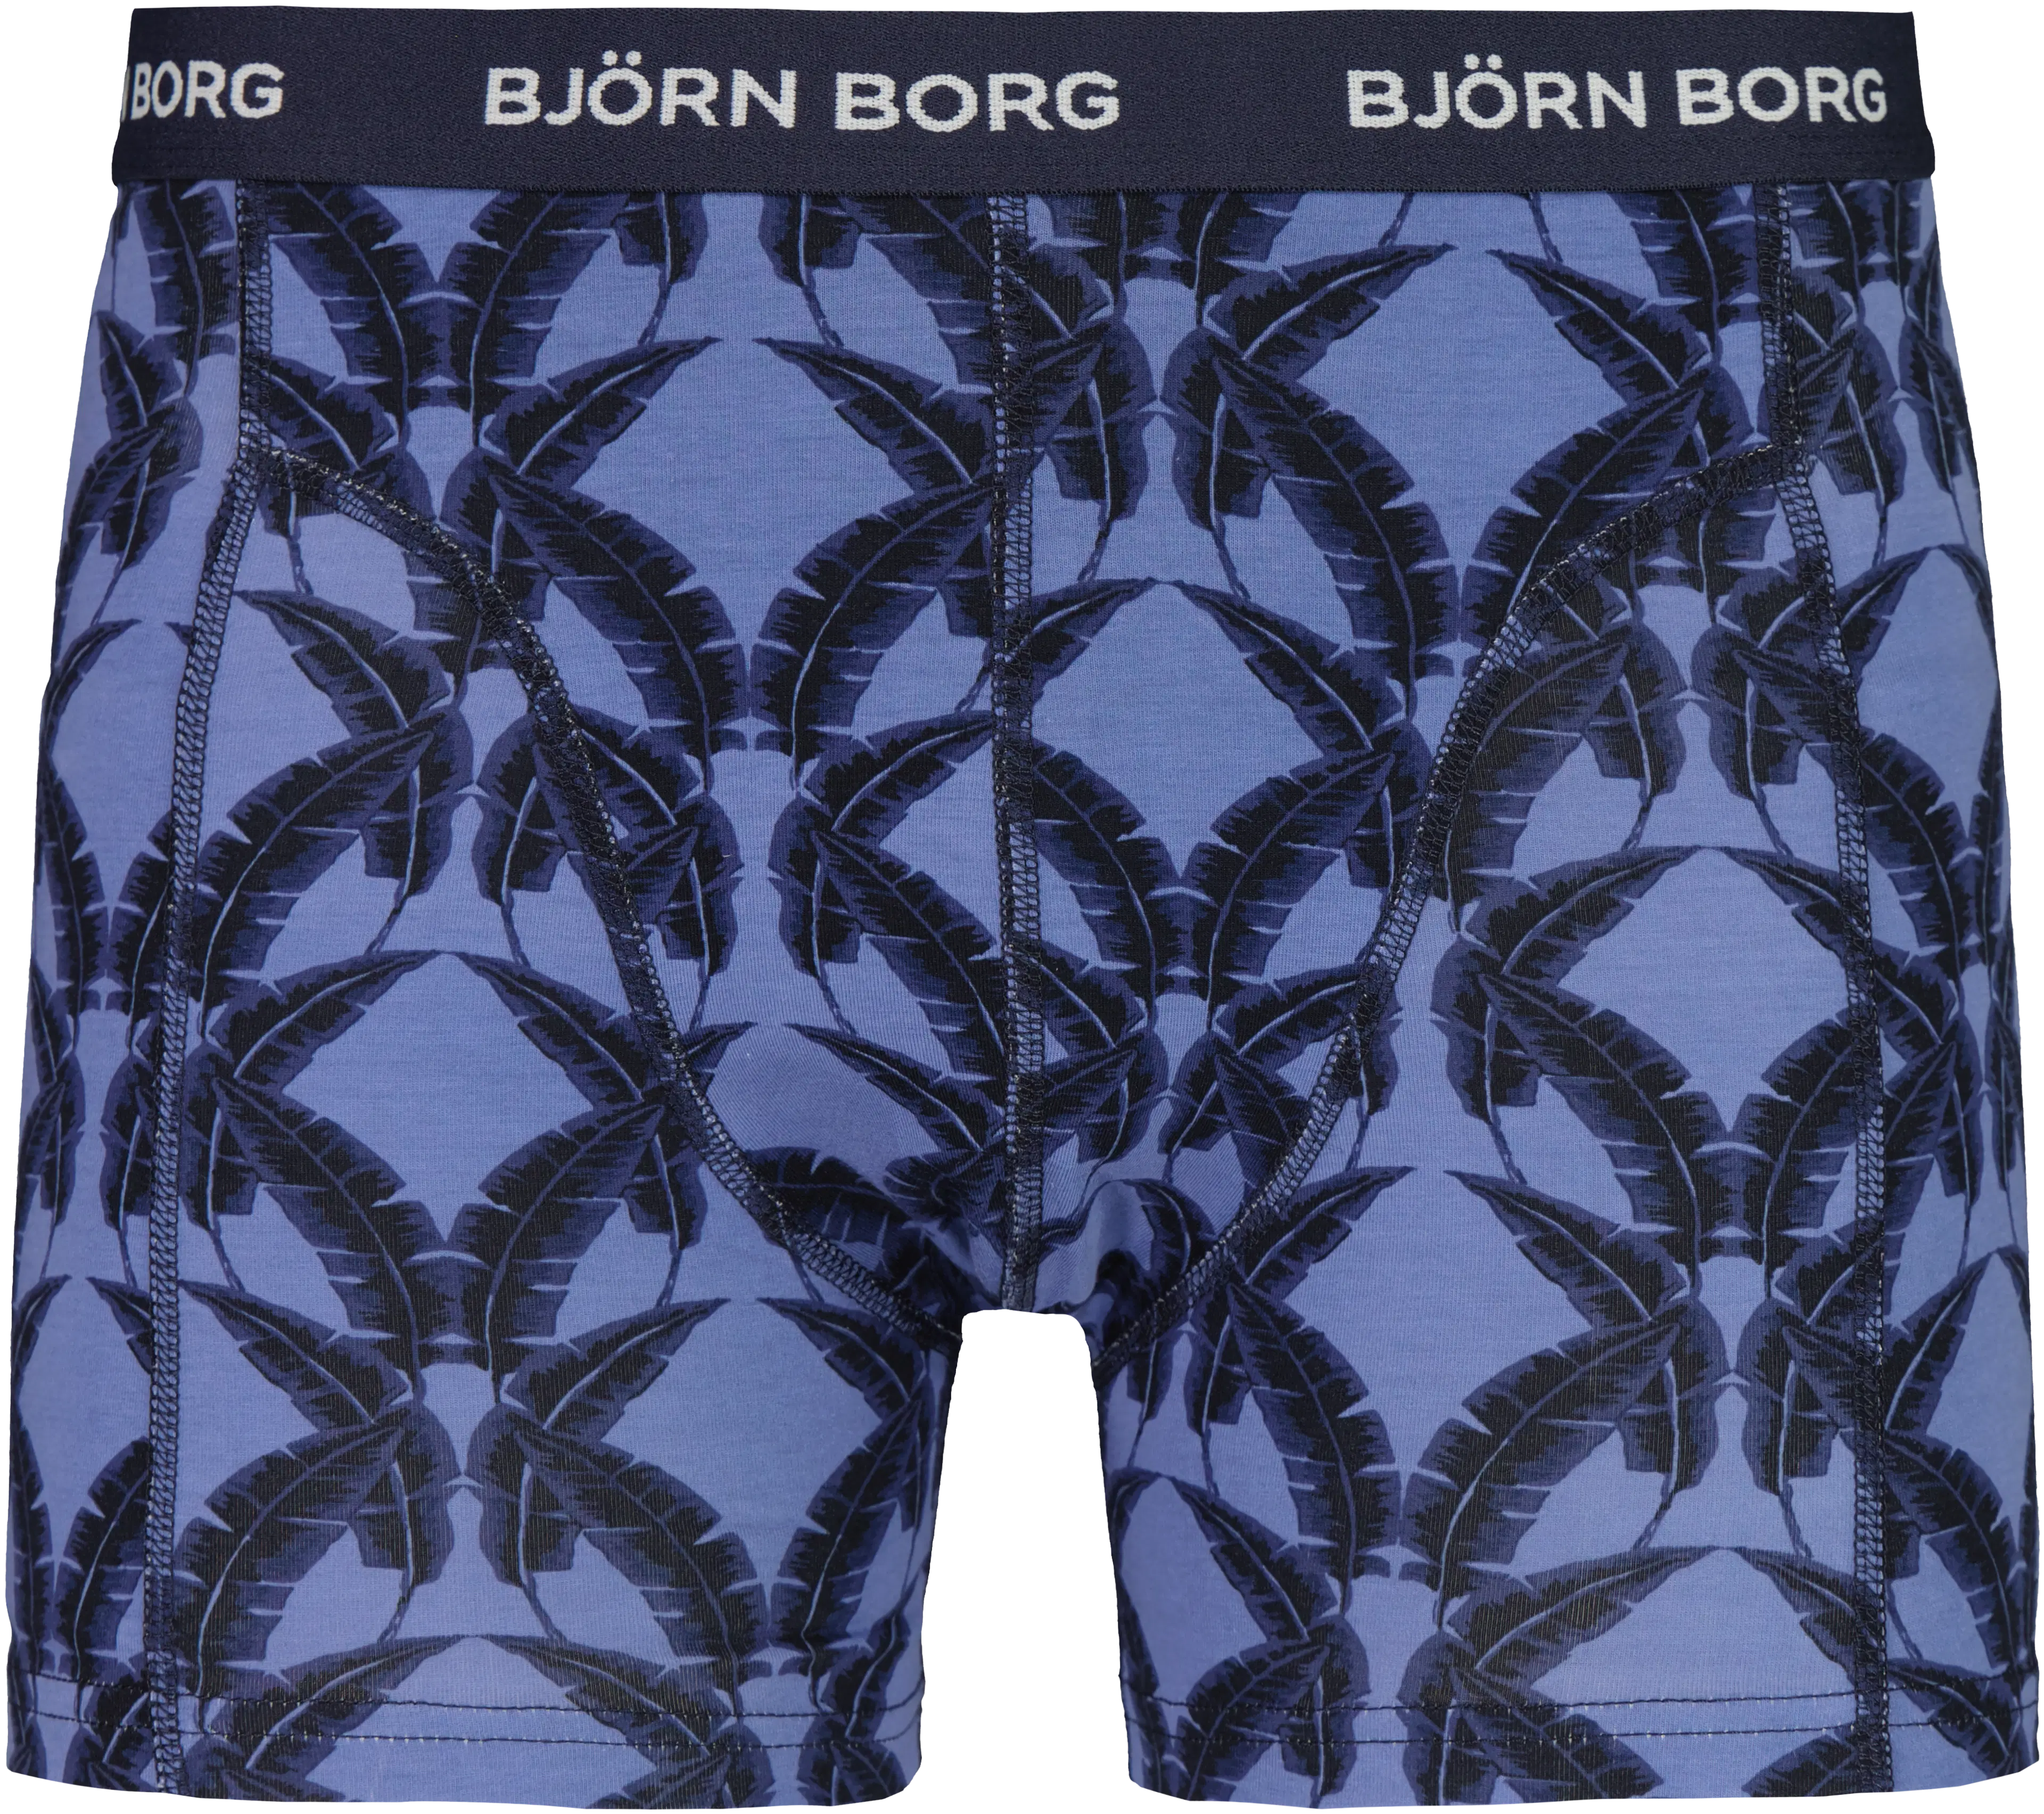 Björn Borg Cotton Stretch bokserit 7 kpl/pkt